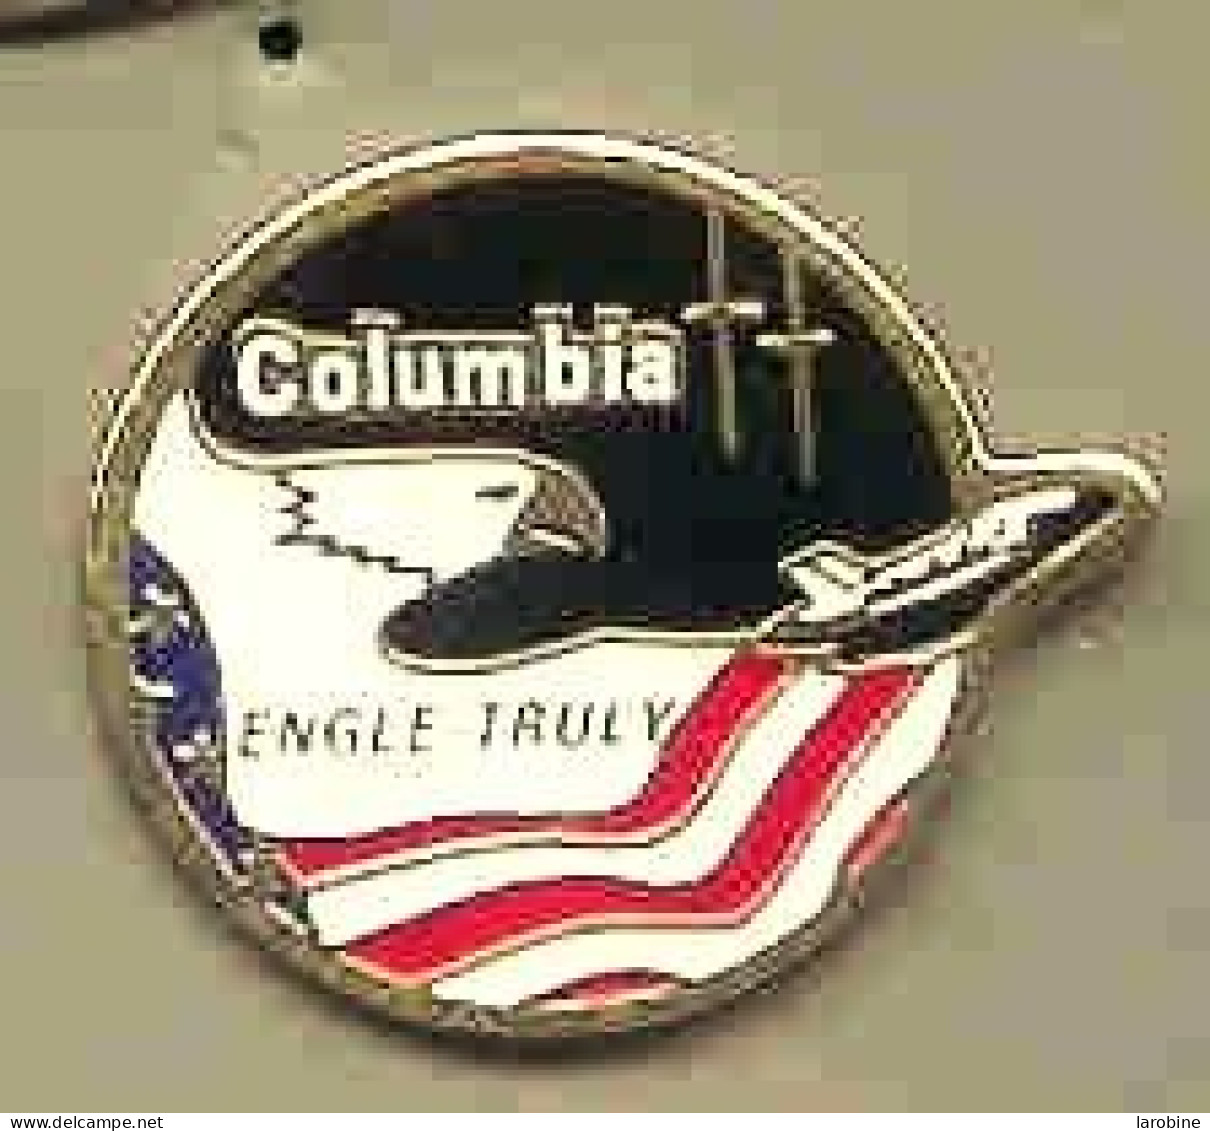 @@ Espace Fusée Navette Satellite Aigle USA COLUMBIA Engle  Truly  (2.2x2.4) @@fnm39 - Raumfahrt